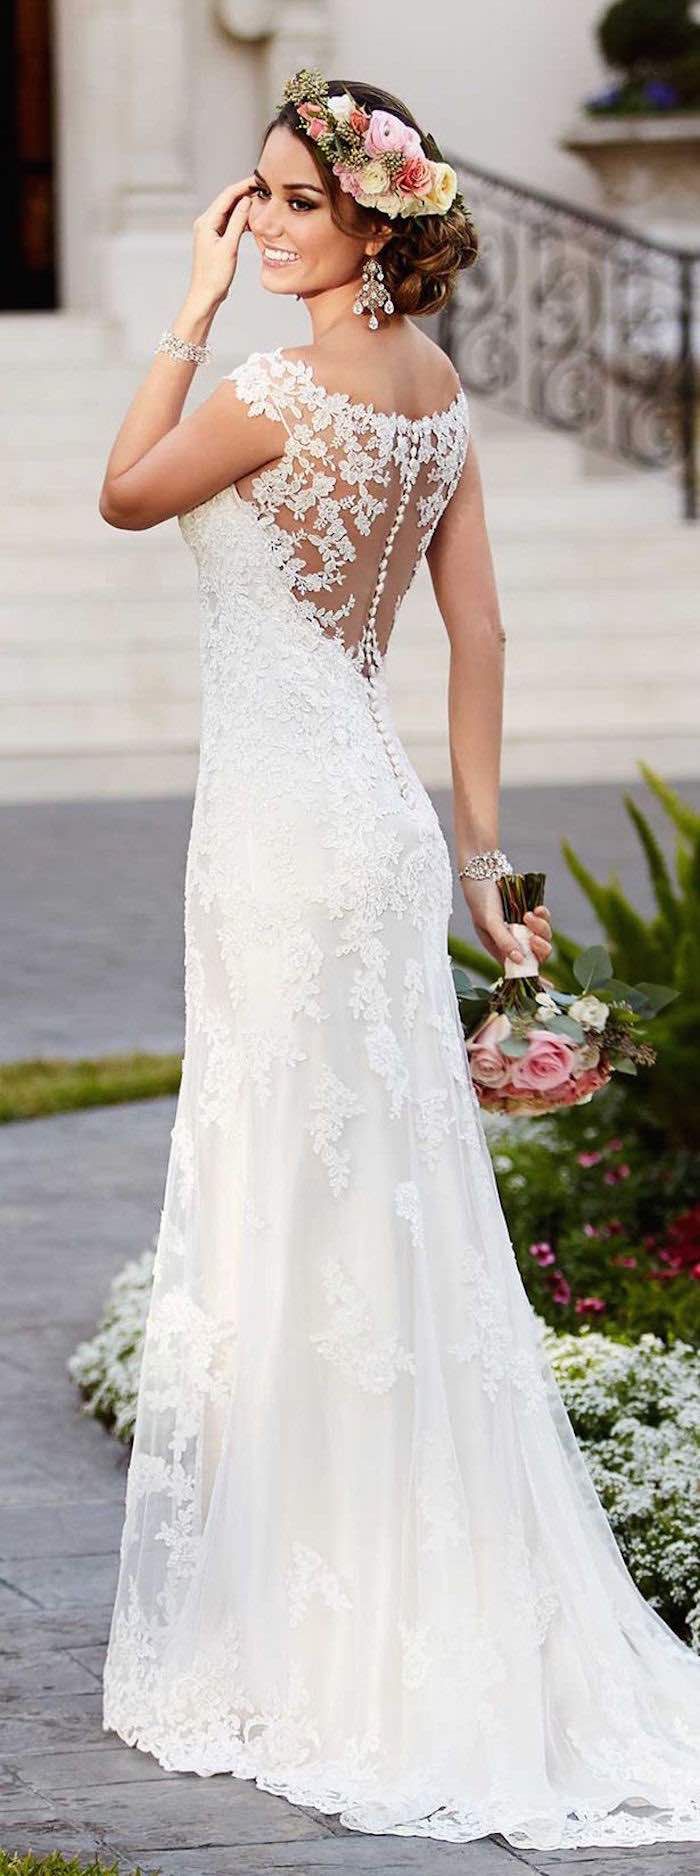 25 Stunning Lace Wedding Dresses Ideas Wohh Wedding 4775